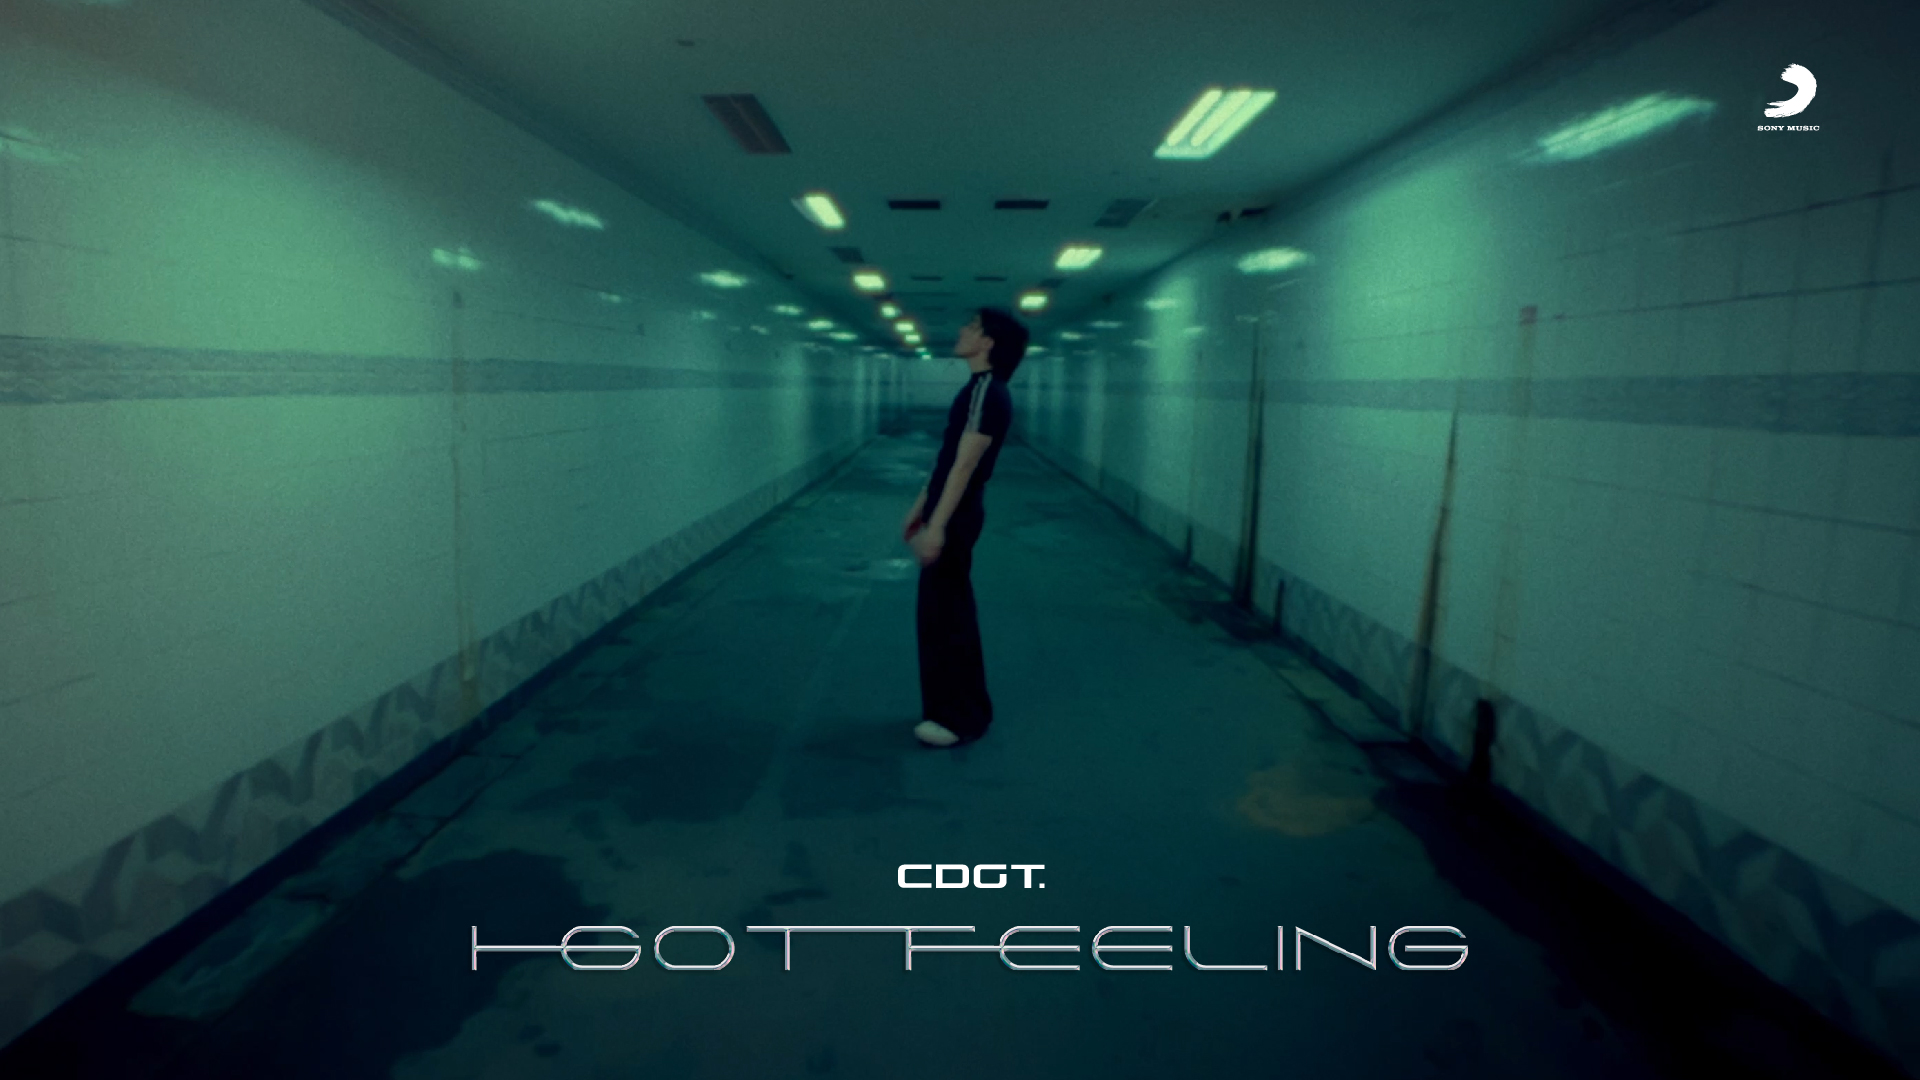 CDGuntee – I Got Feeling [Official MV]